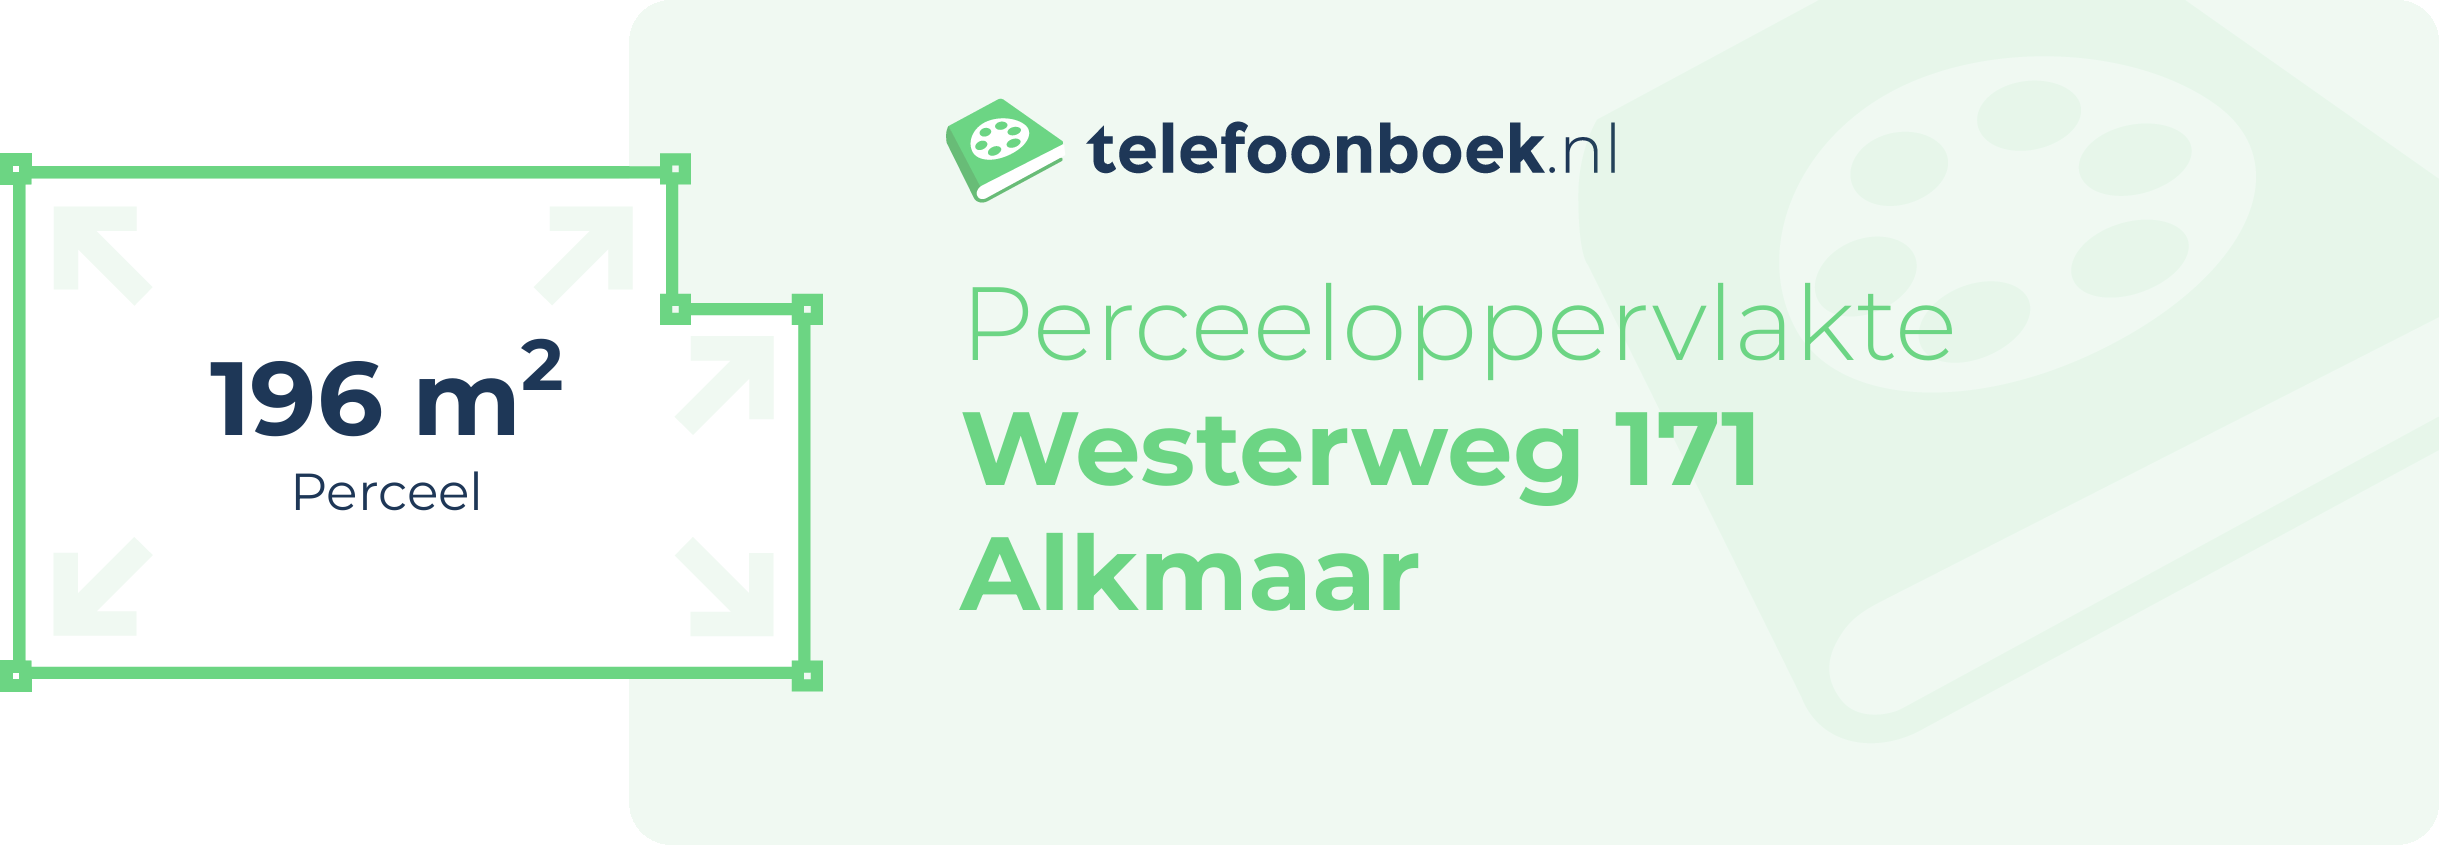 Perceeloppervlakte Westerweg 171 Alkmaar